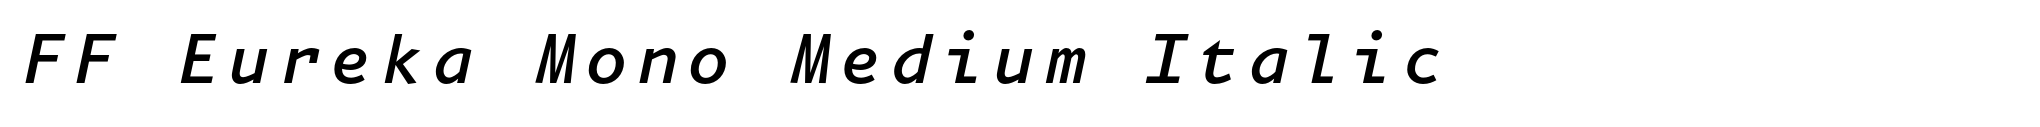 FF Eureka Mono Medium Italic image